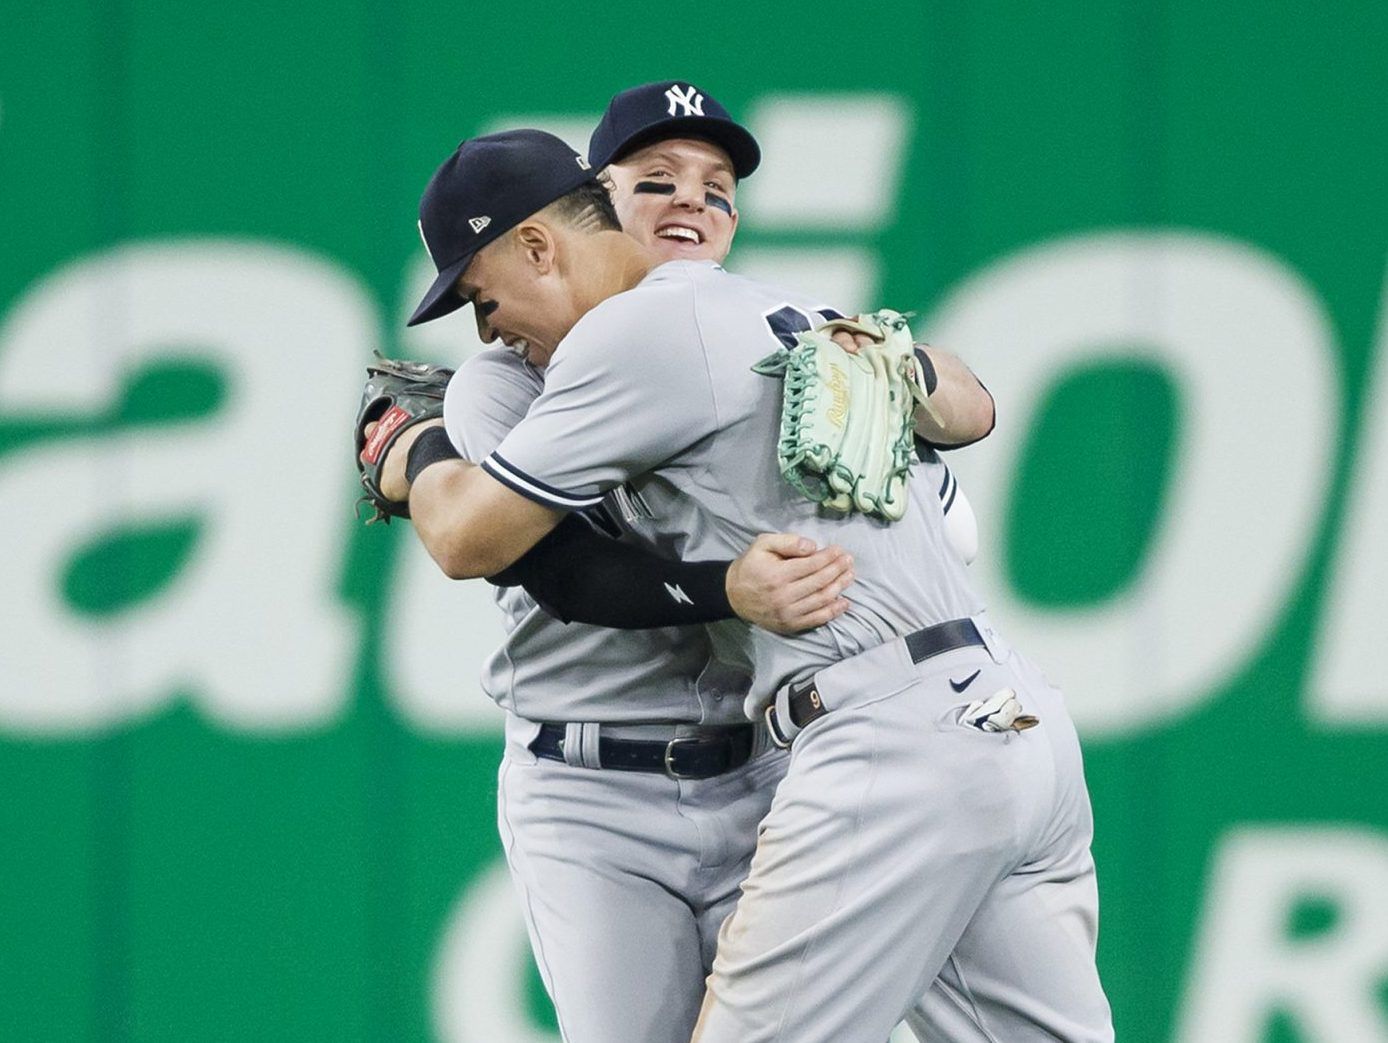 Yankees celebrate AL East title in style